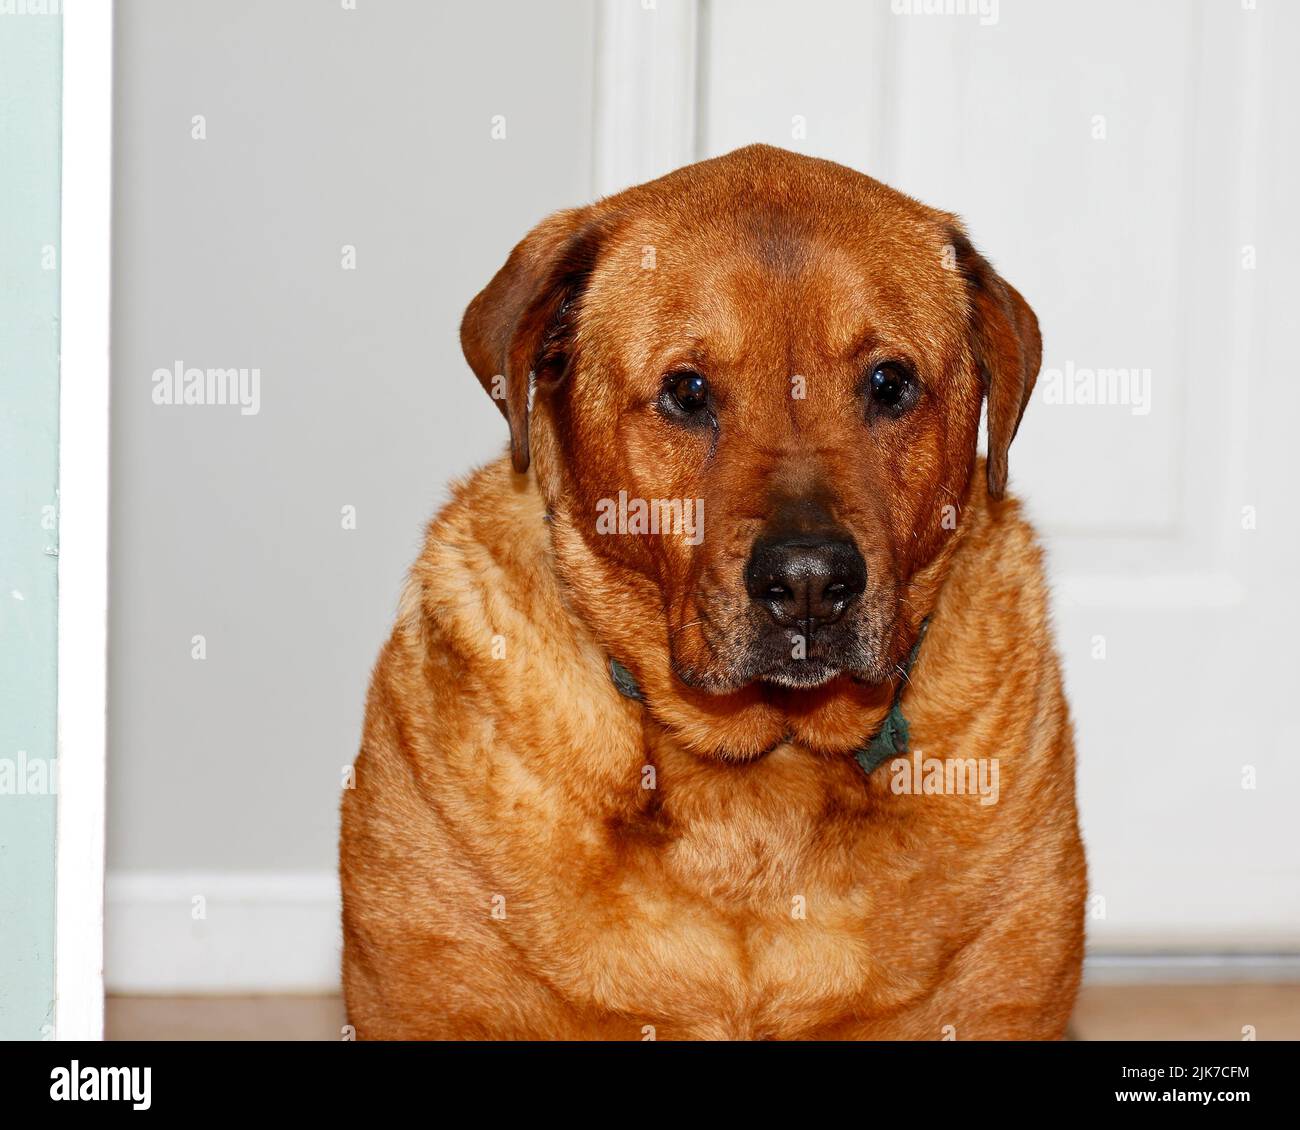 dog portrait, rust color fur, large, pet, canine, animal, PR Stock Photo